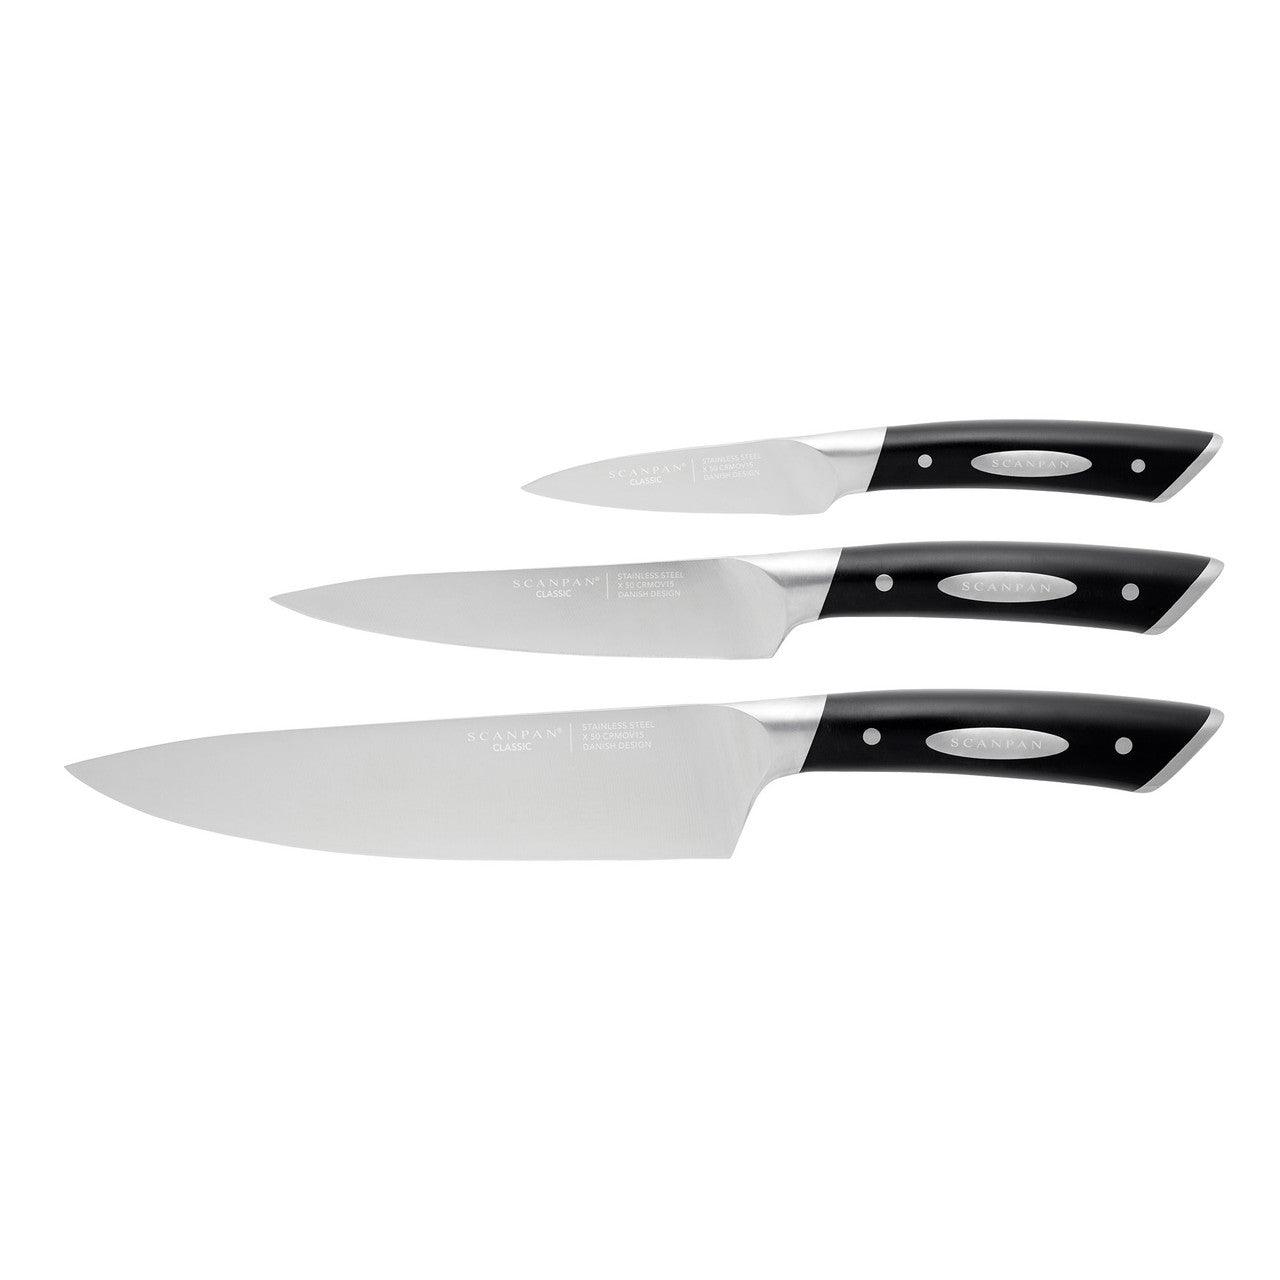 Scanpan Classic 5 Inch Santoku Knife 